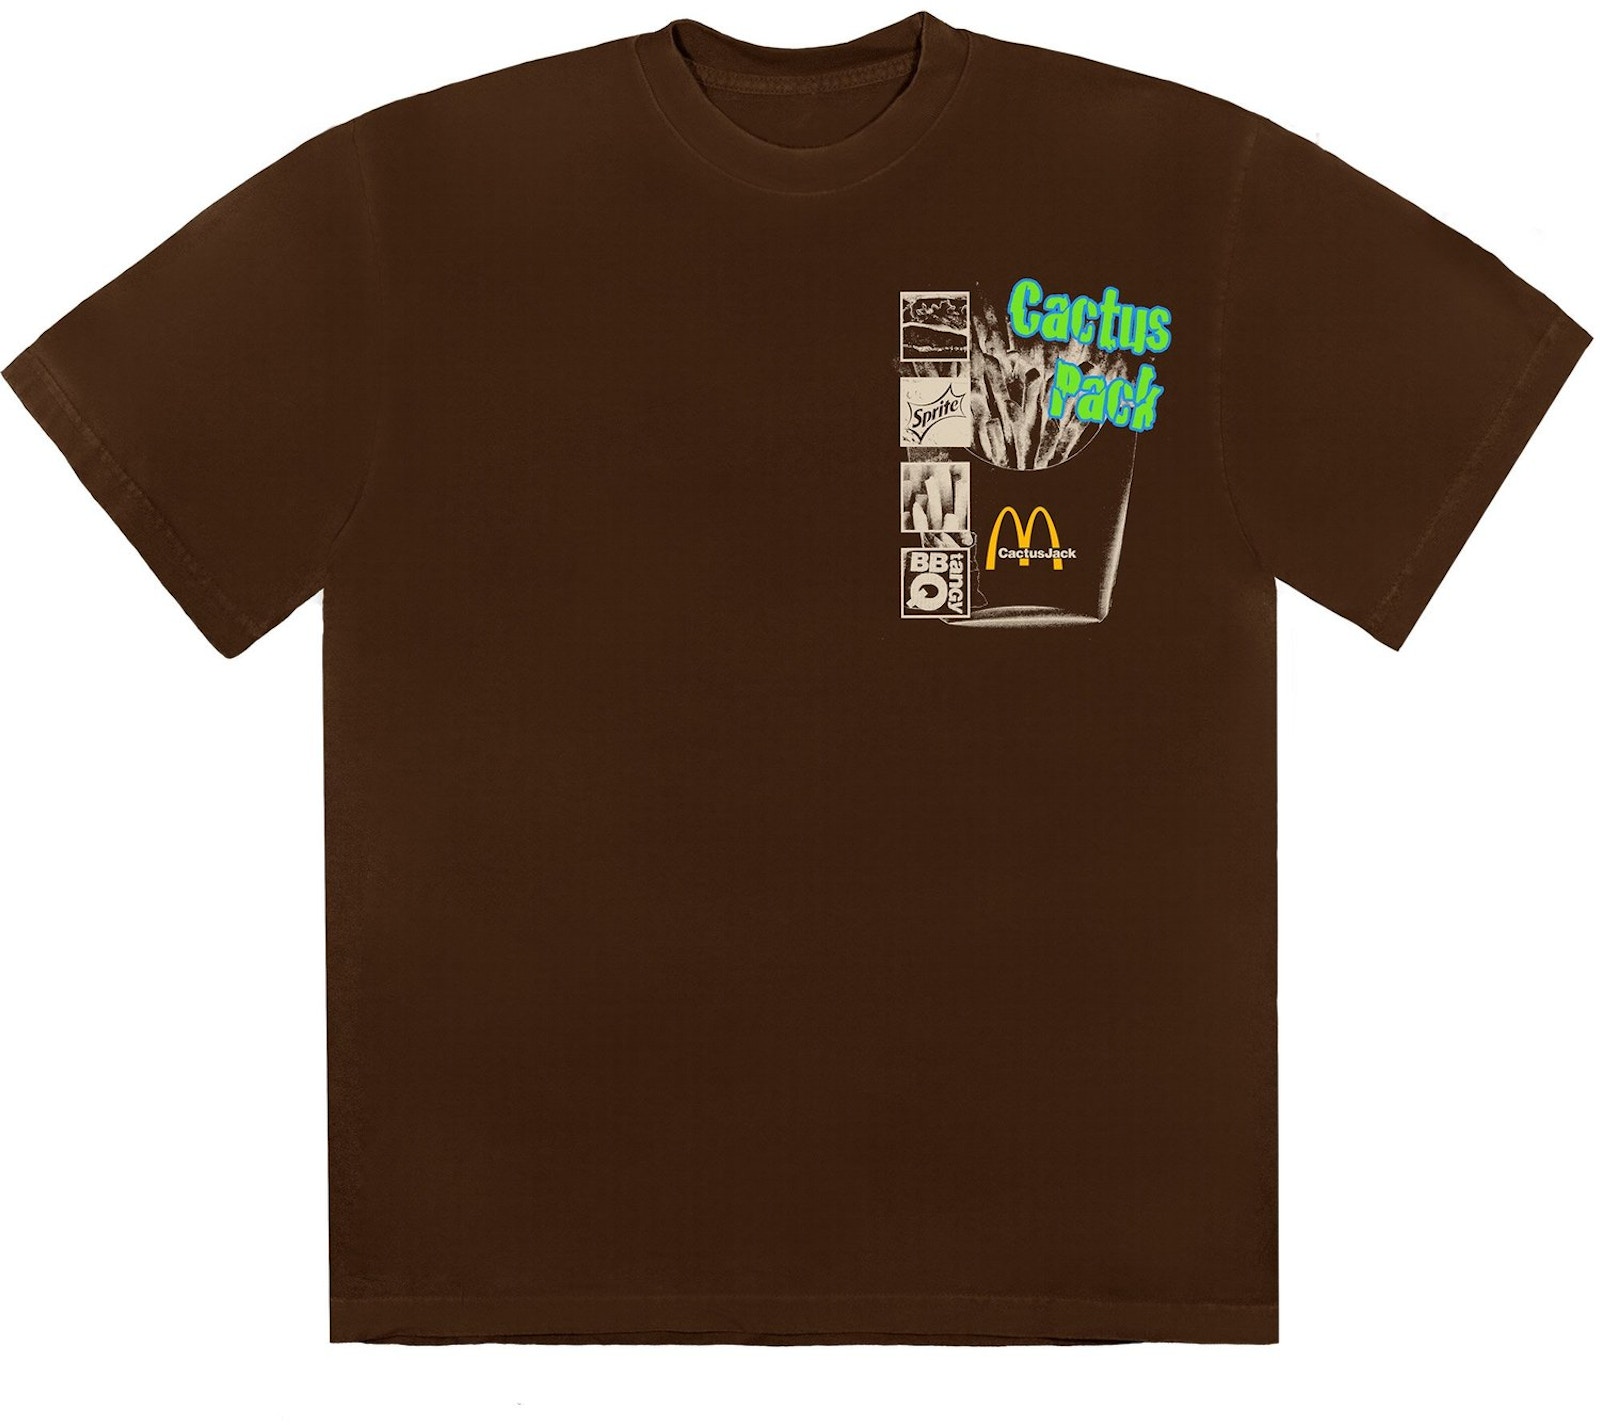 Travis Scott x McDonald's Cactus Pack Vintage Promo T-Shirt Brown - FW20